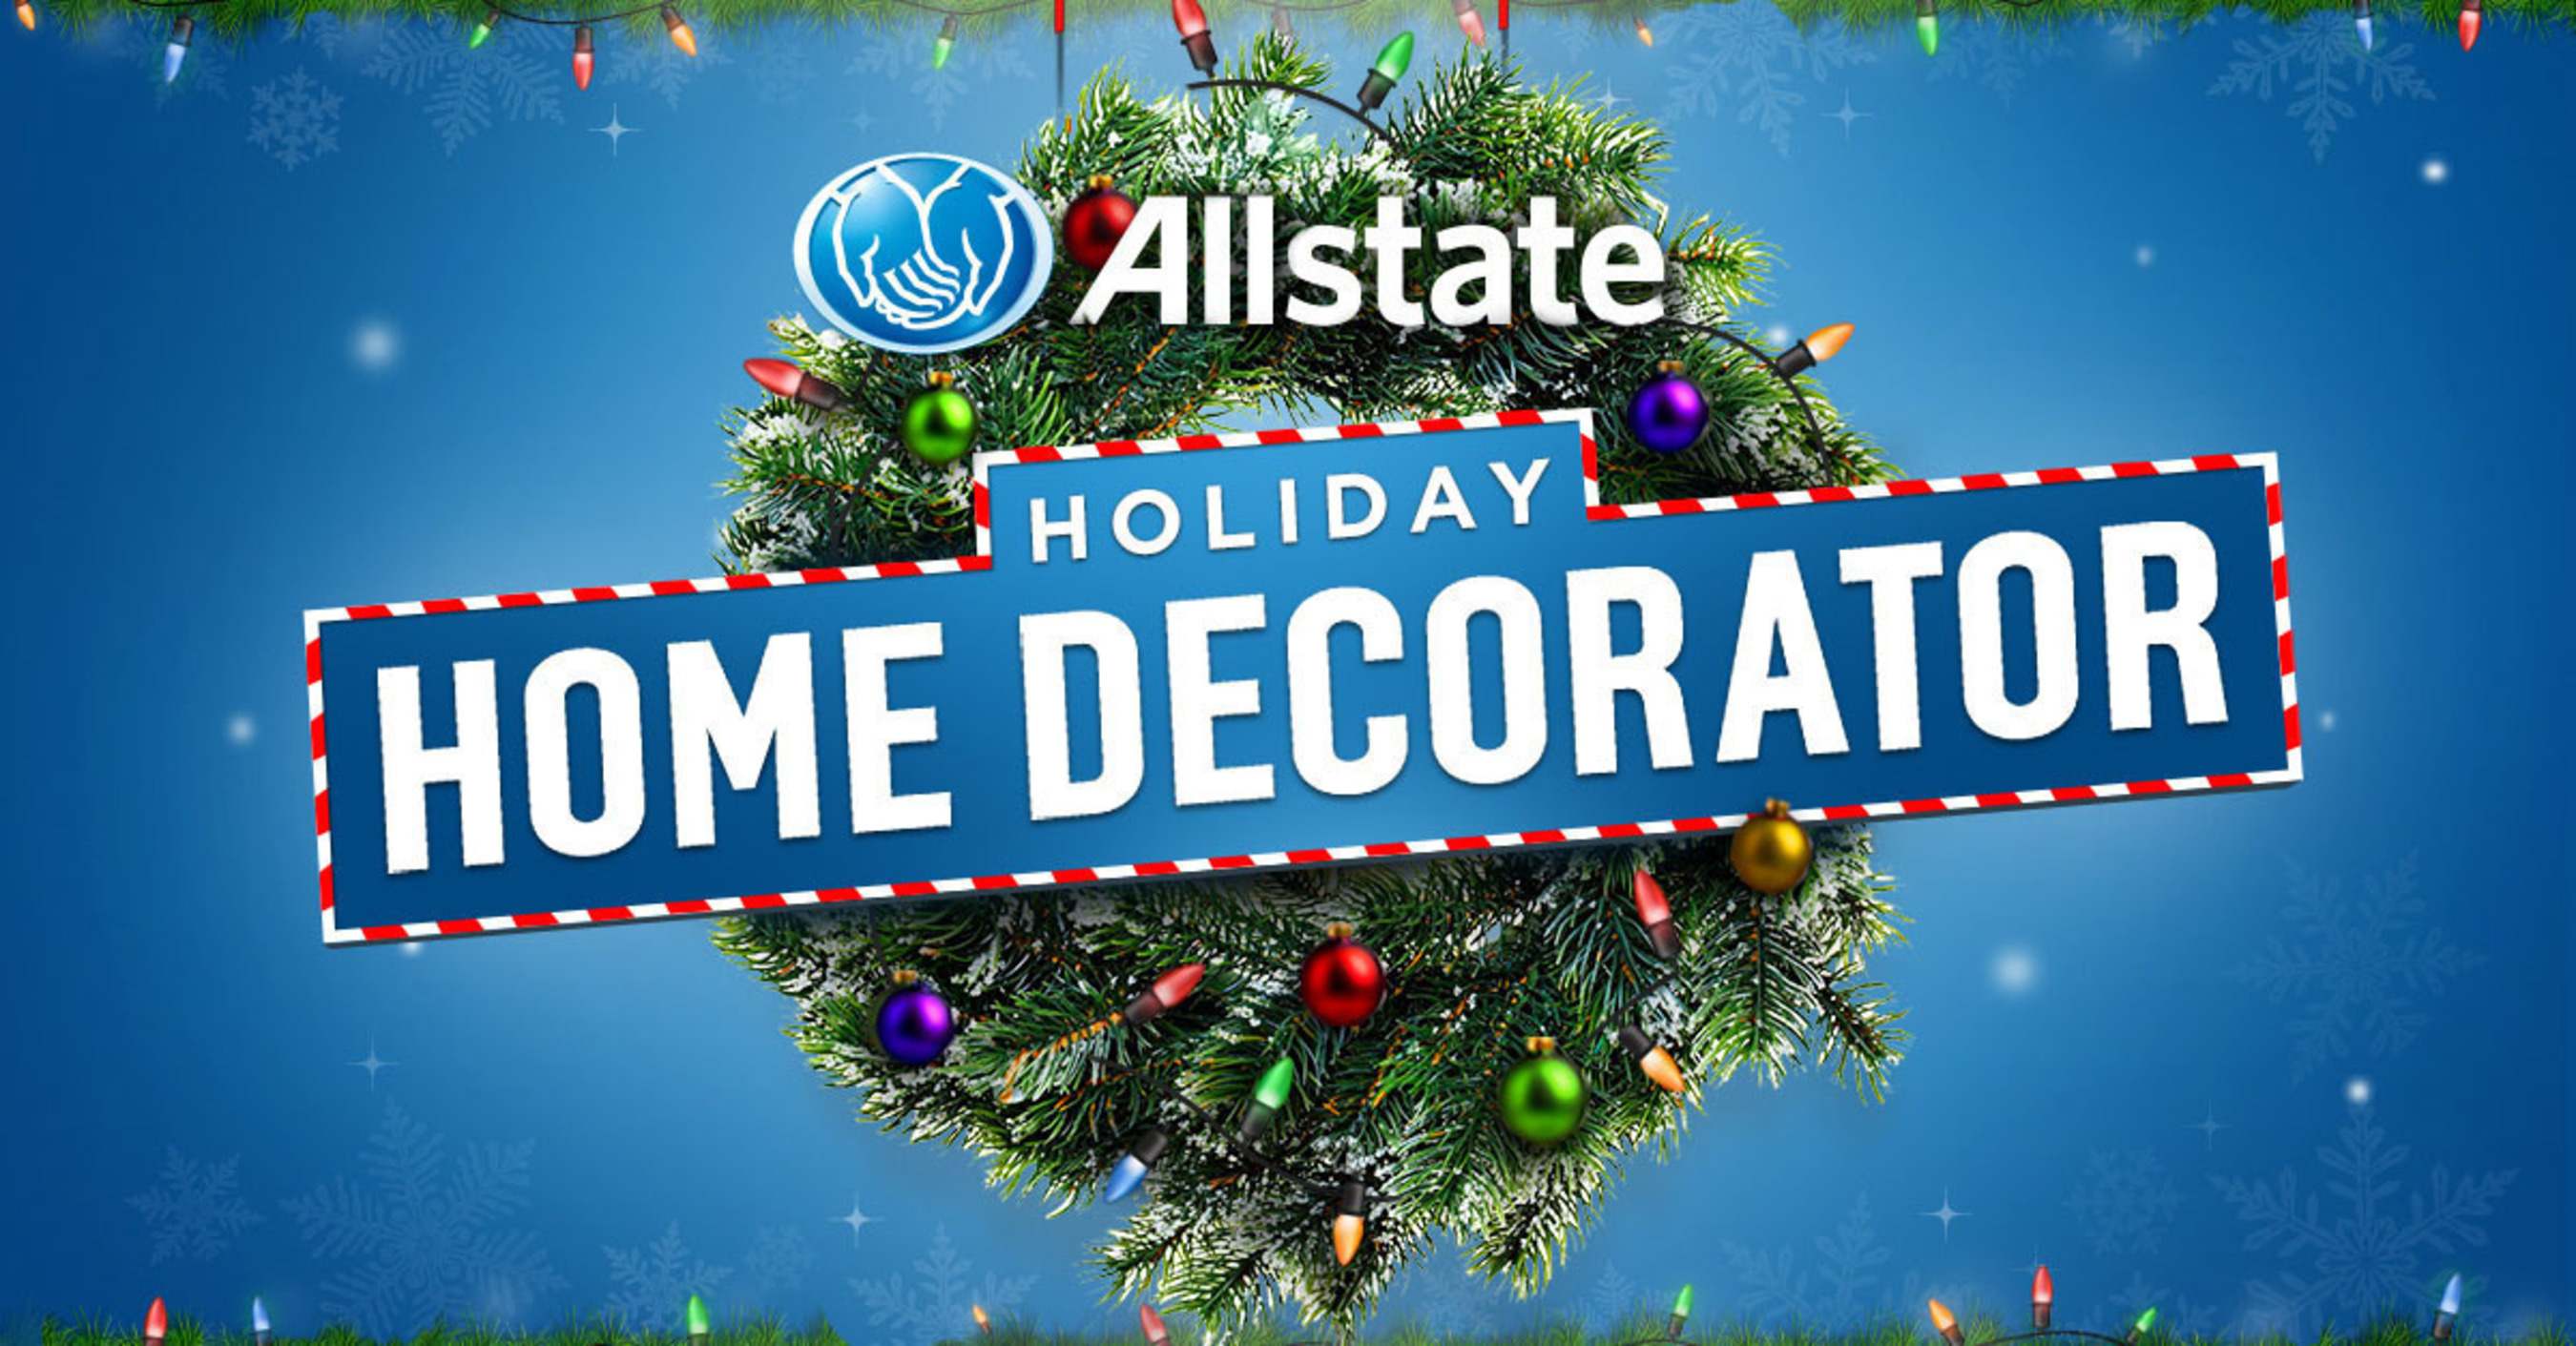 Avoid Mayhem this season with the Allstate Holiday Home Decorator. (PRNewsFoto/Allstate)